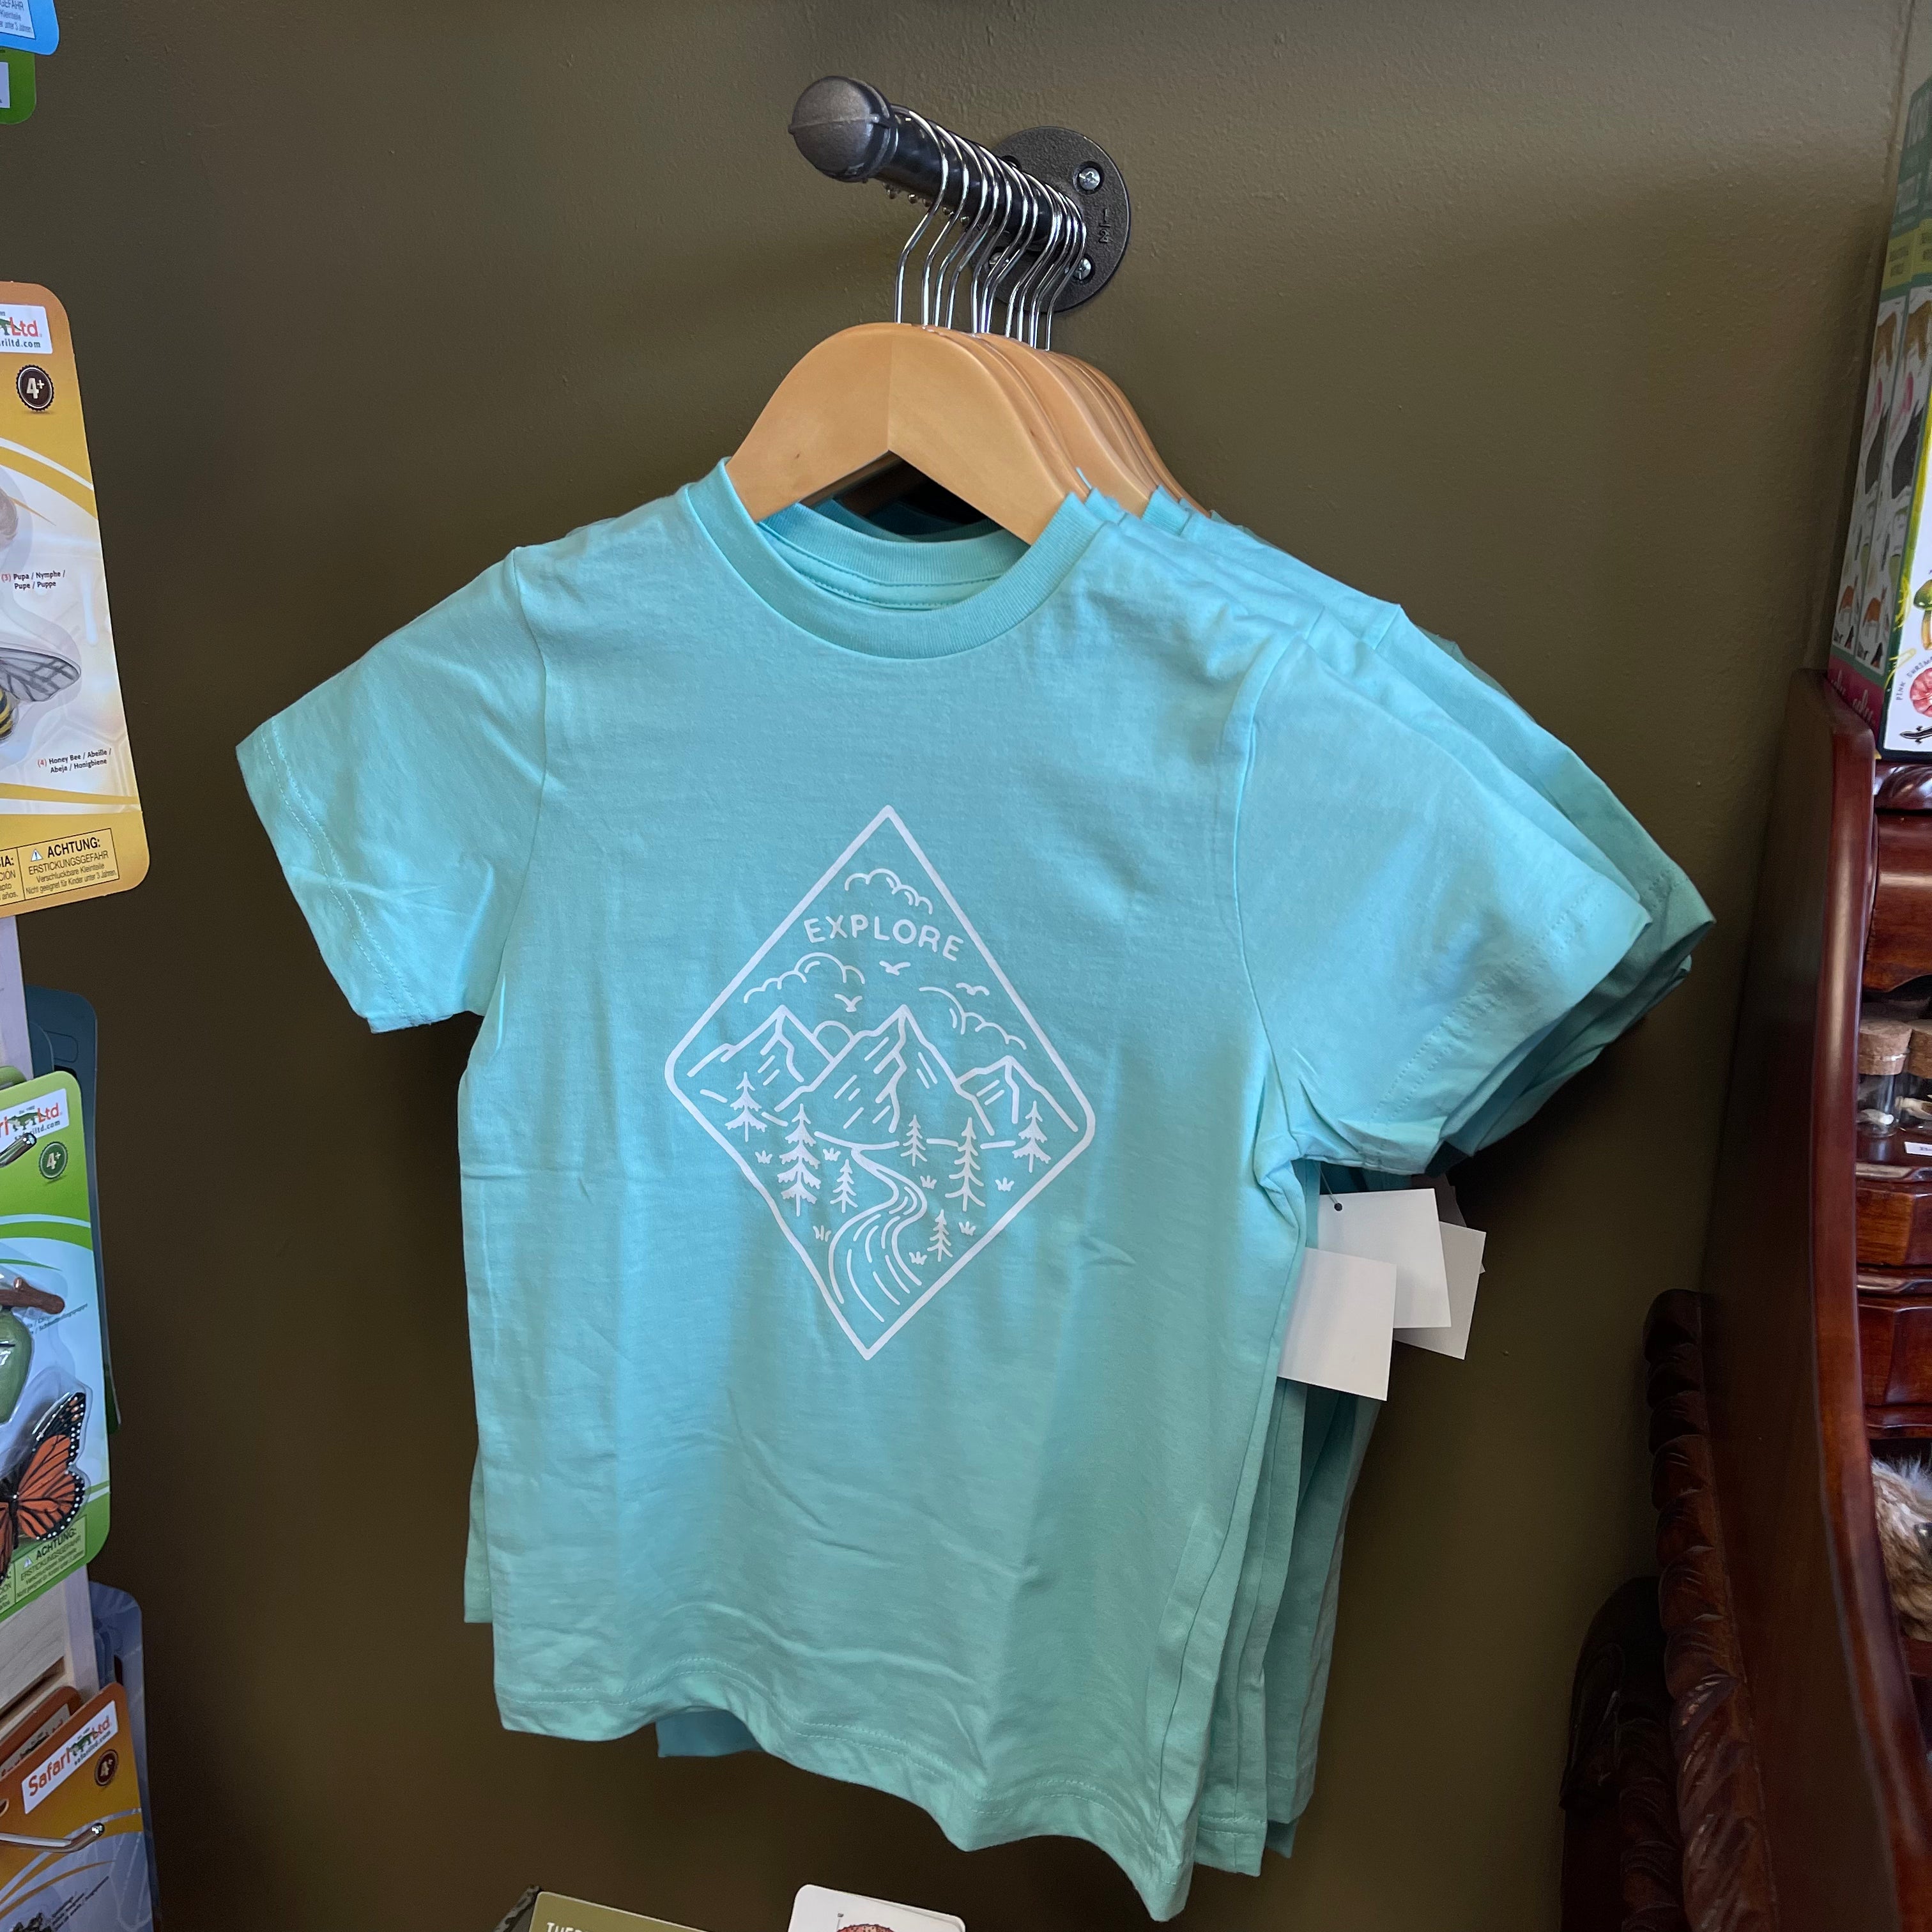 "Explore" Kids Graphic T-Shirt